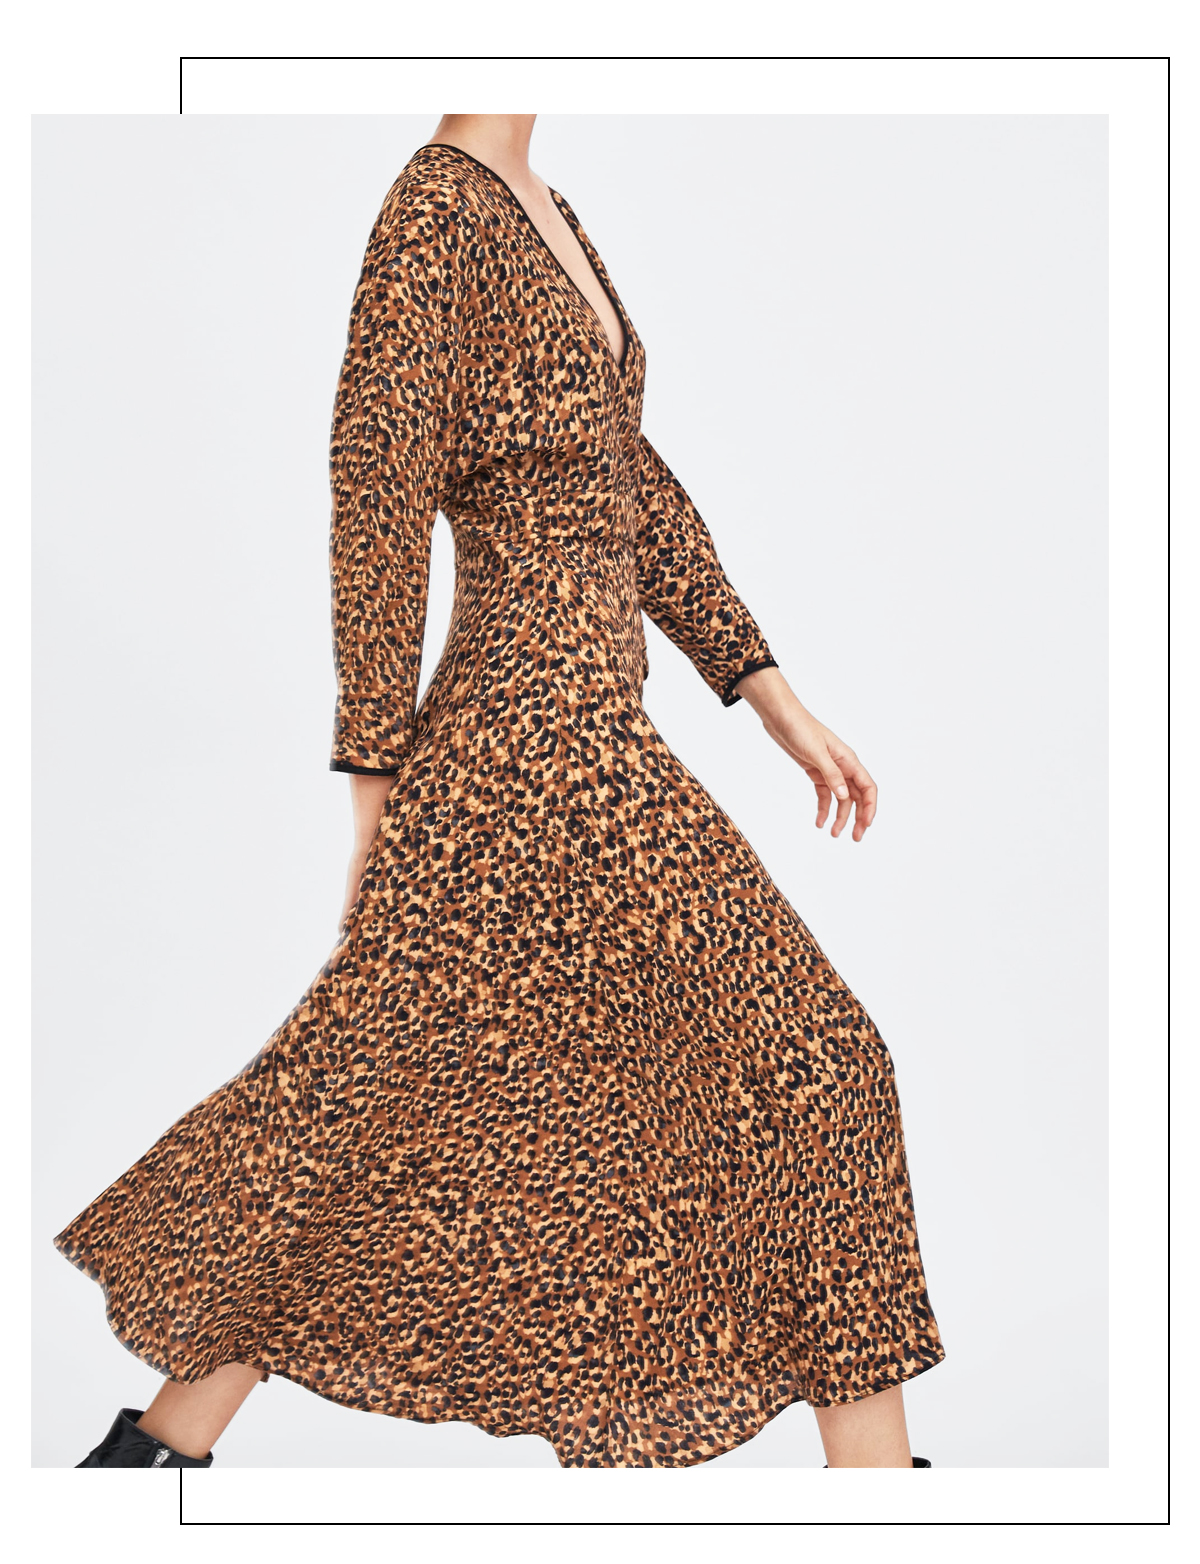 robe leopard tendance